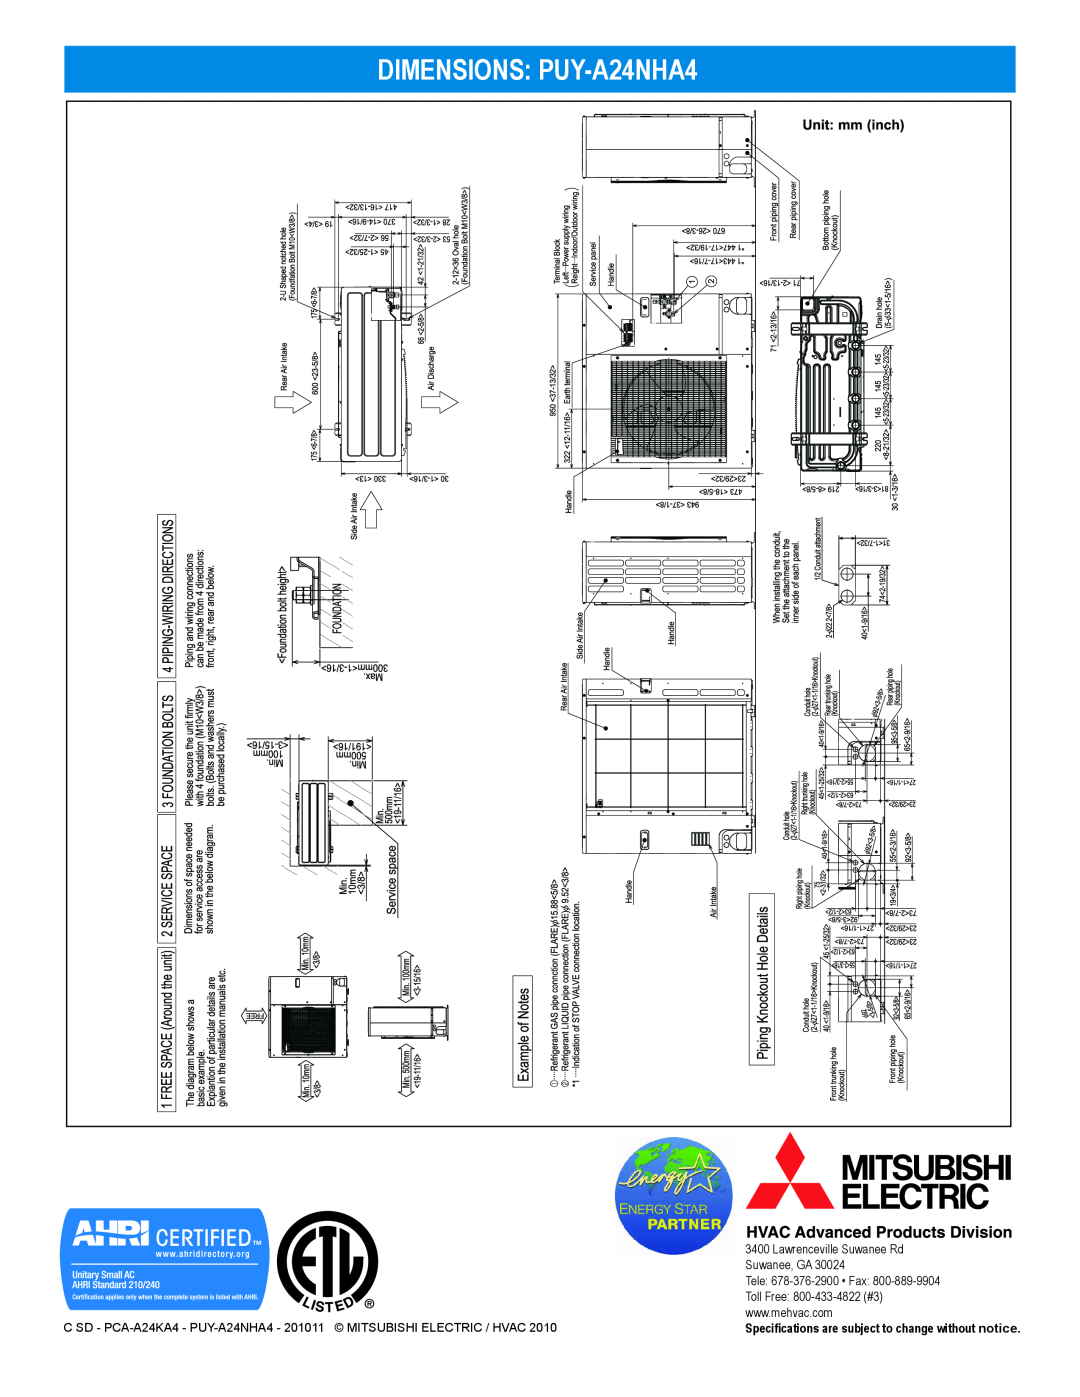 Mitsubishi Electronics PCA-A24KA4 DIMENSIONS PUY-A24NHA4, Lawrenceville Suwanee Rd, Suwanee, GA, Tele 678-376-2900 Fax 